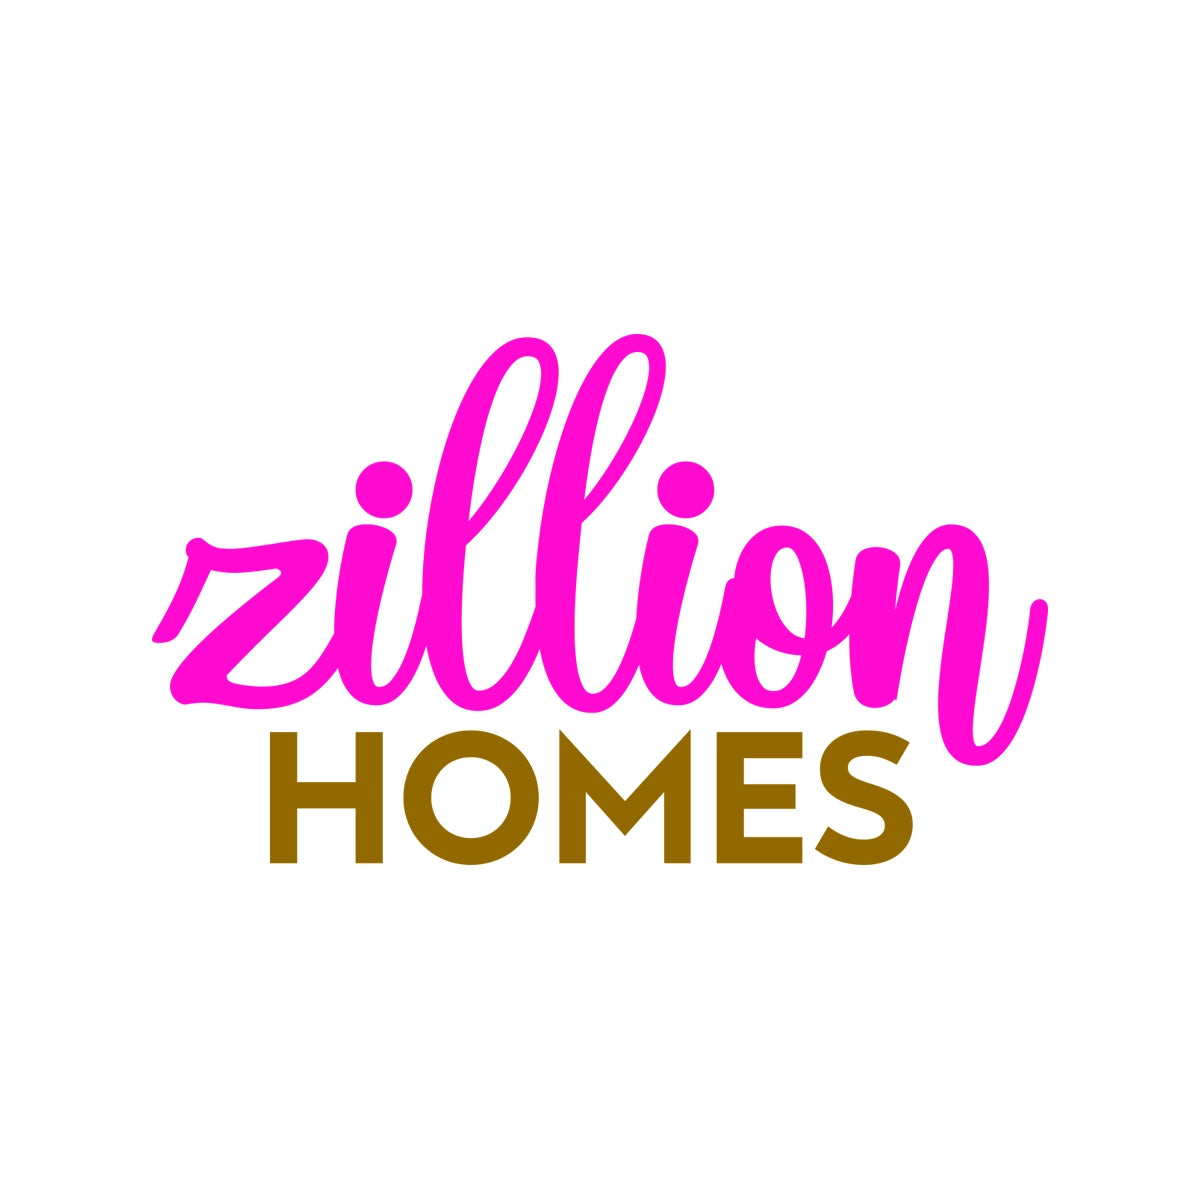 zillion.homes